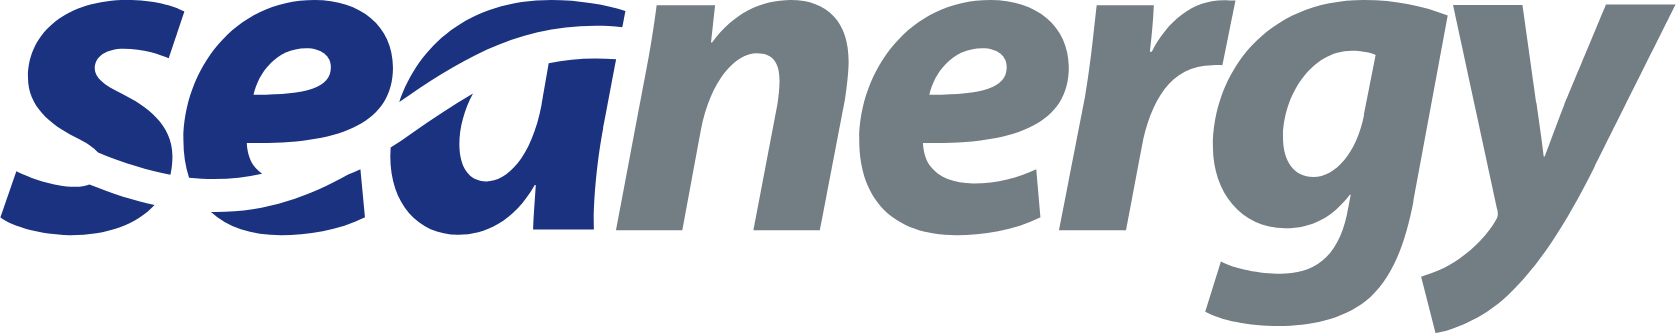 Seanergy Maritime logo large (transparent PNG)